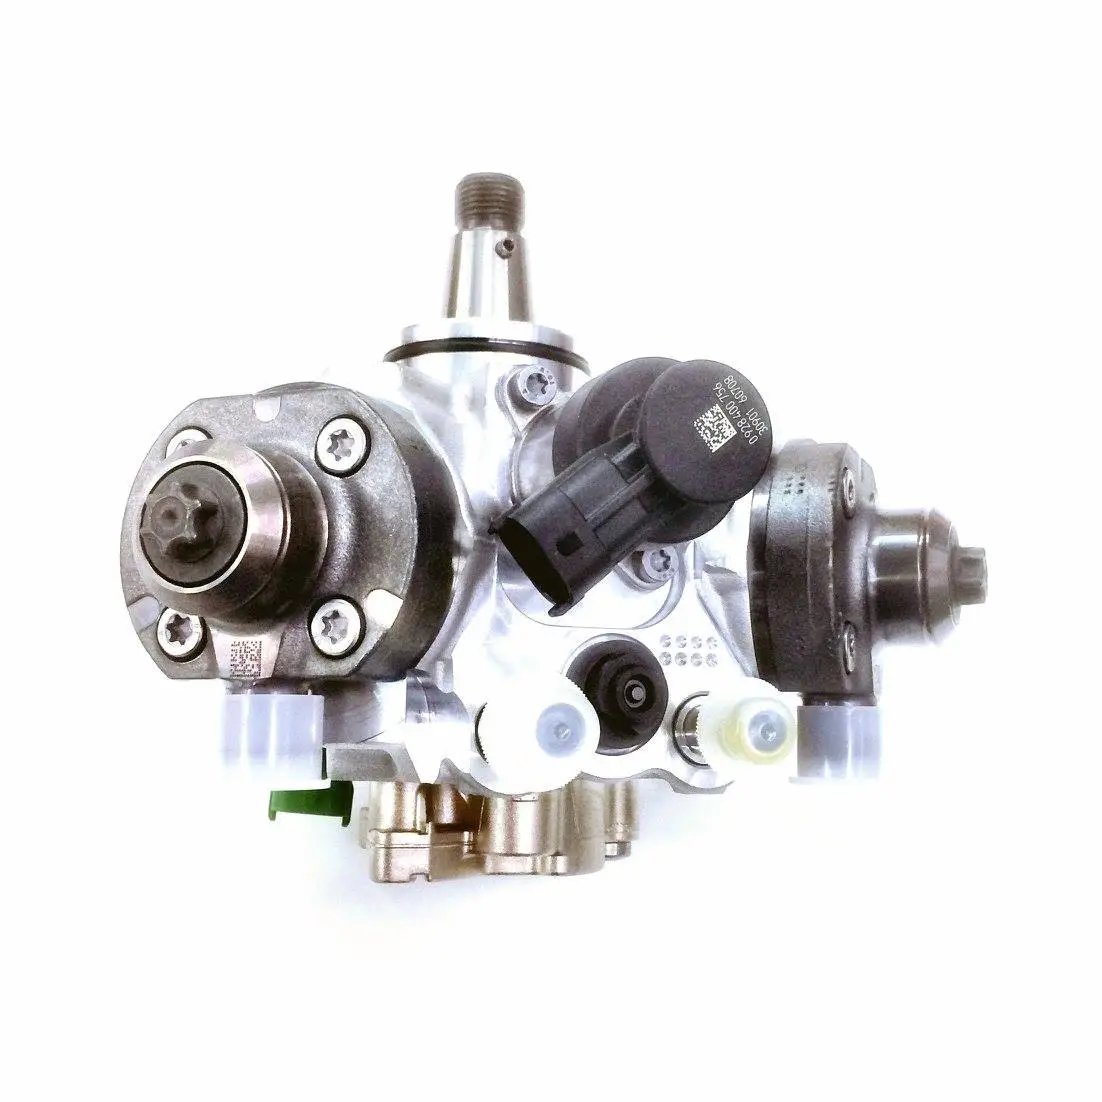 Bosch CP4.2 high-pressure fuel pump